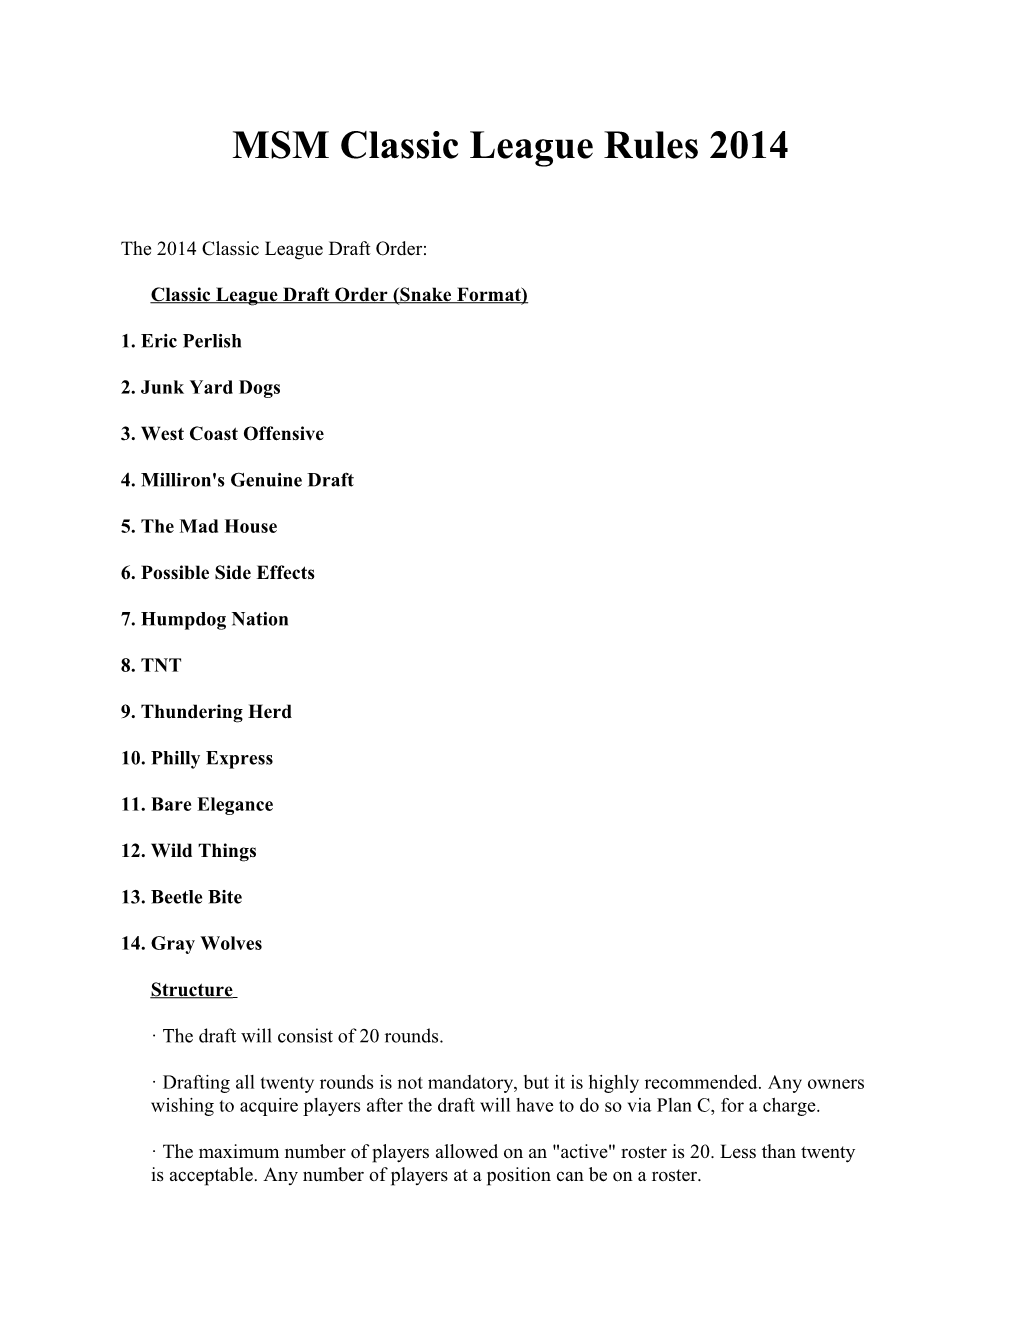 MSM Classic League Rules 2008